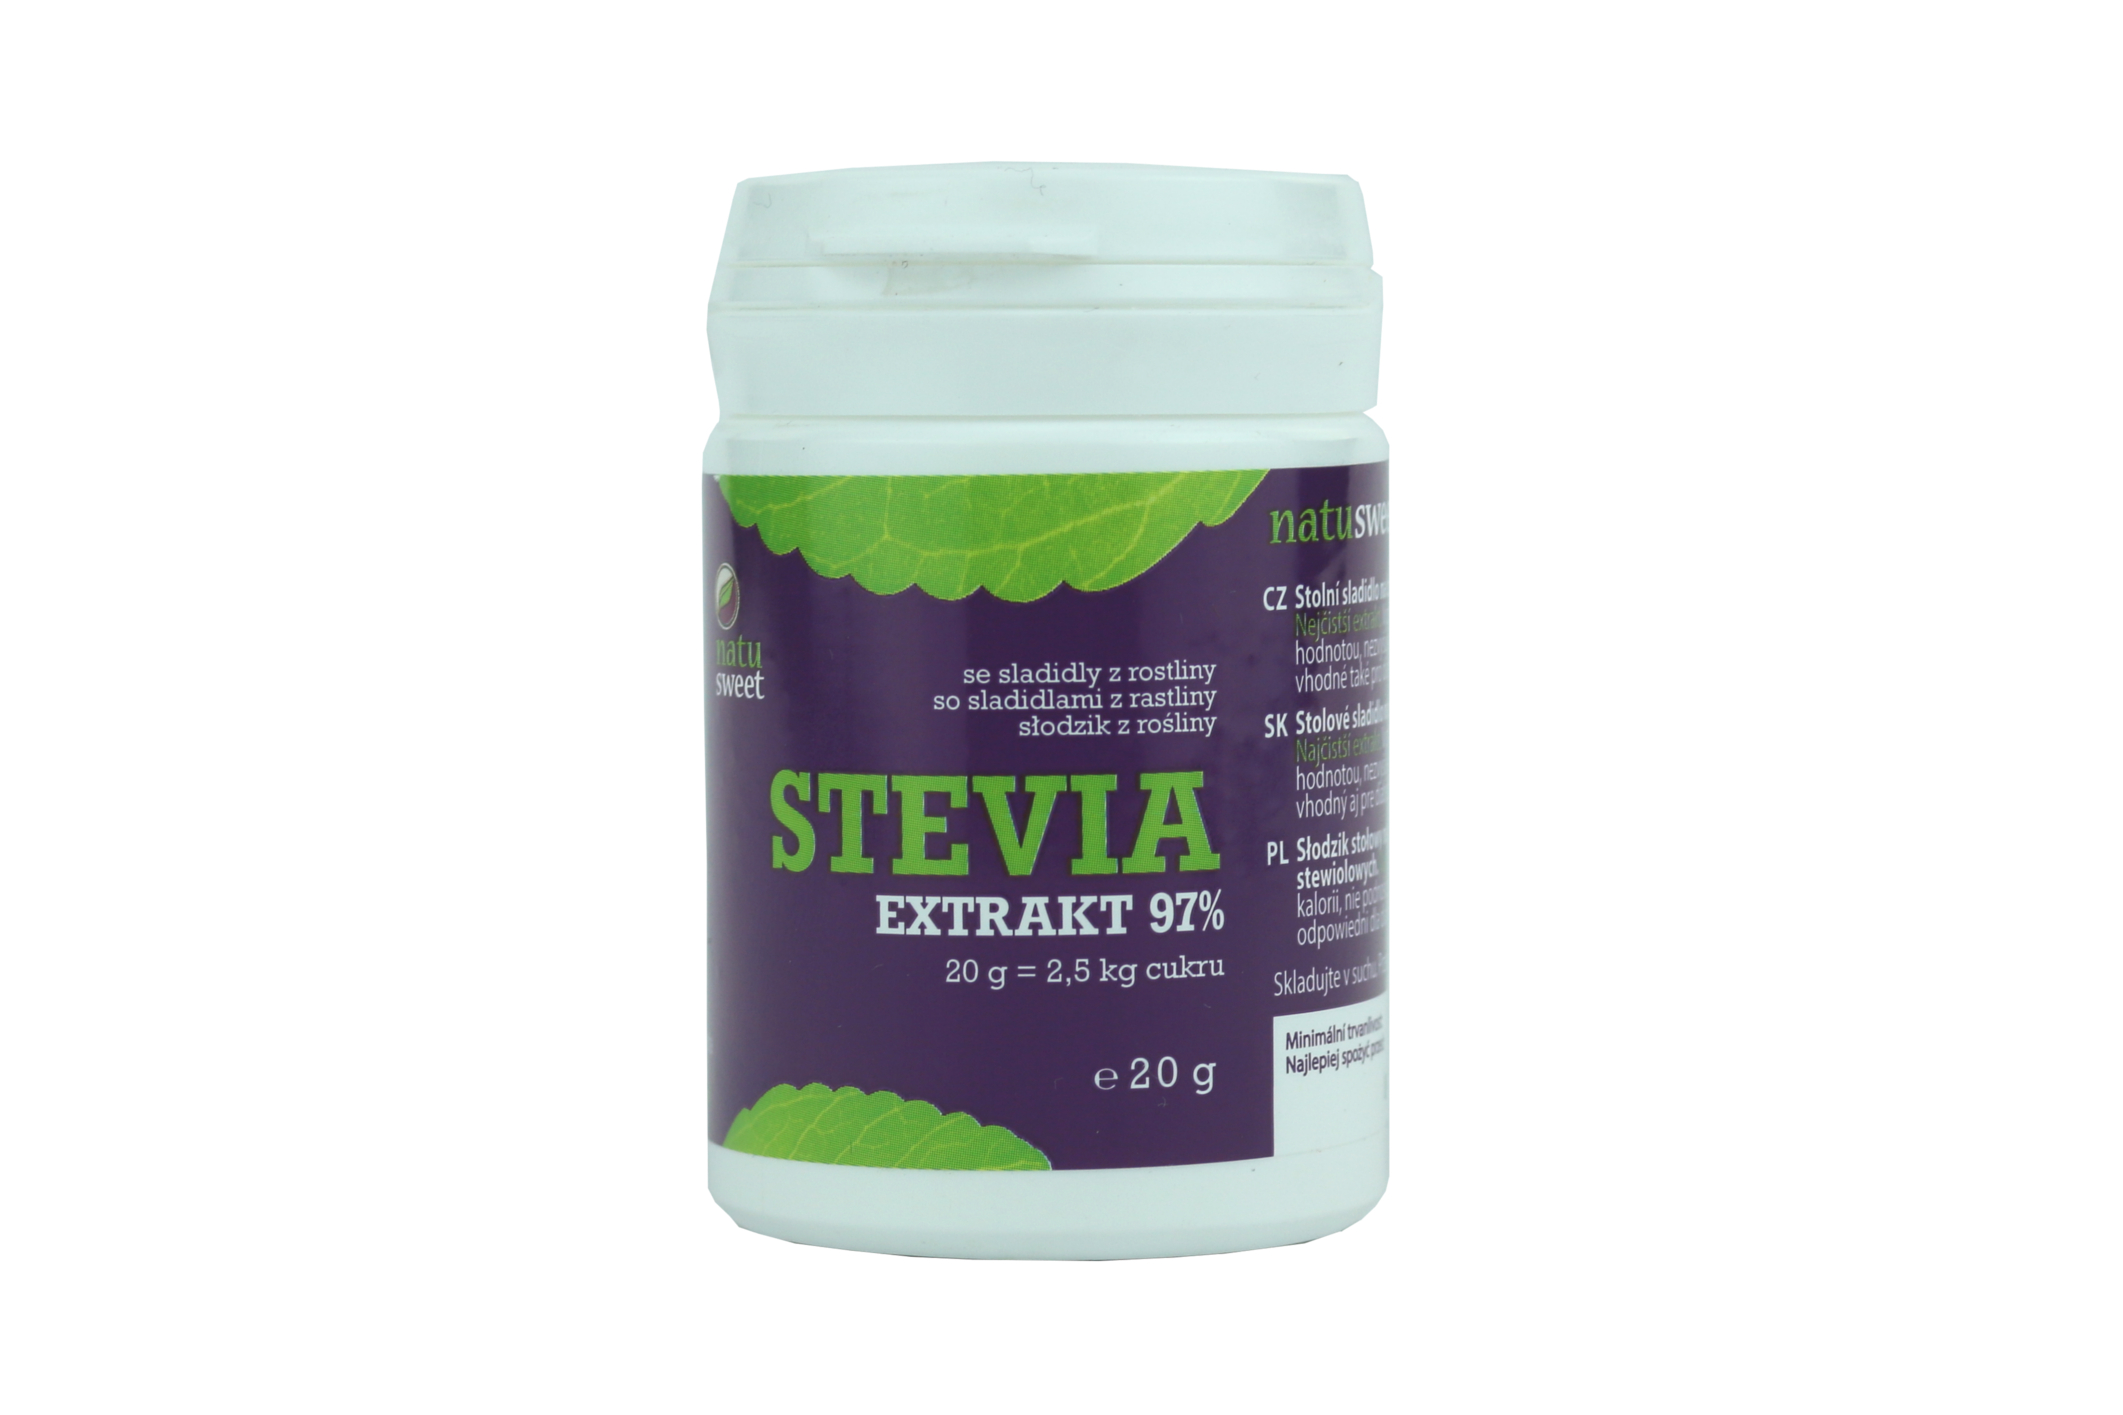 Stevia extrakt 97% Natusweet 20 g